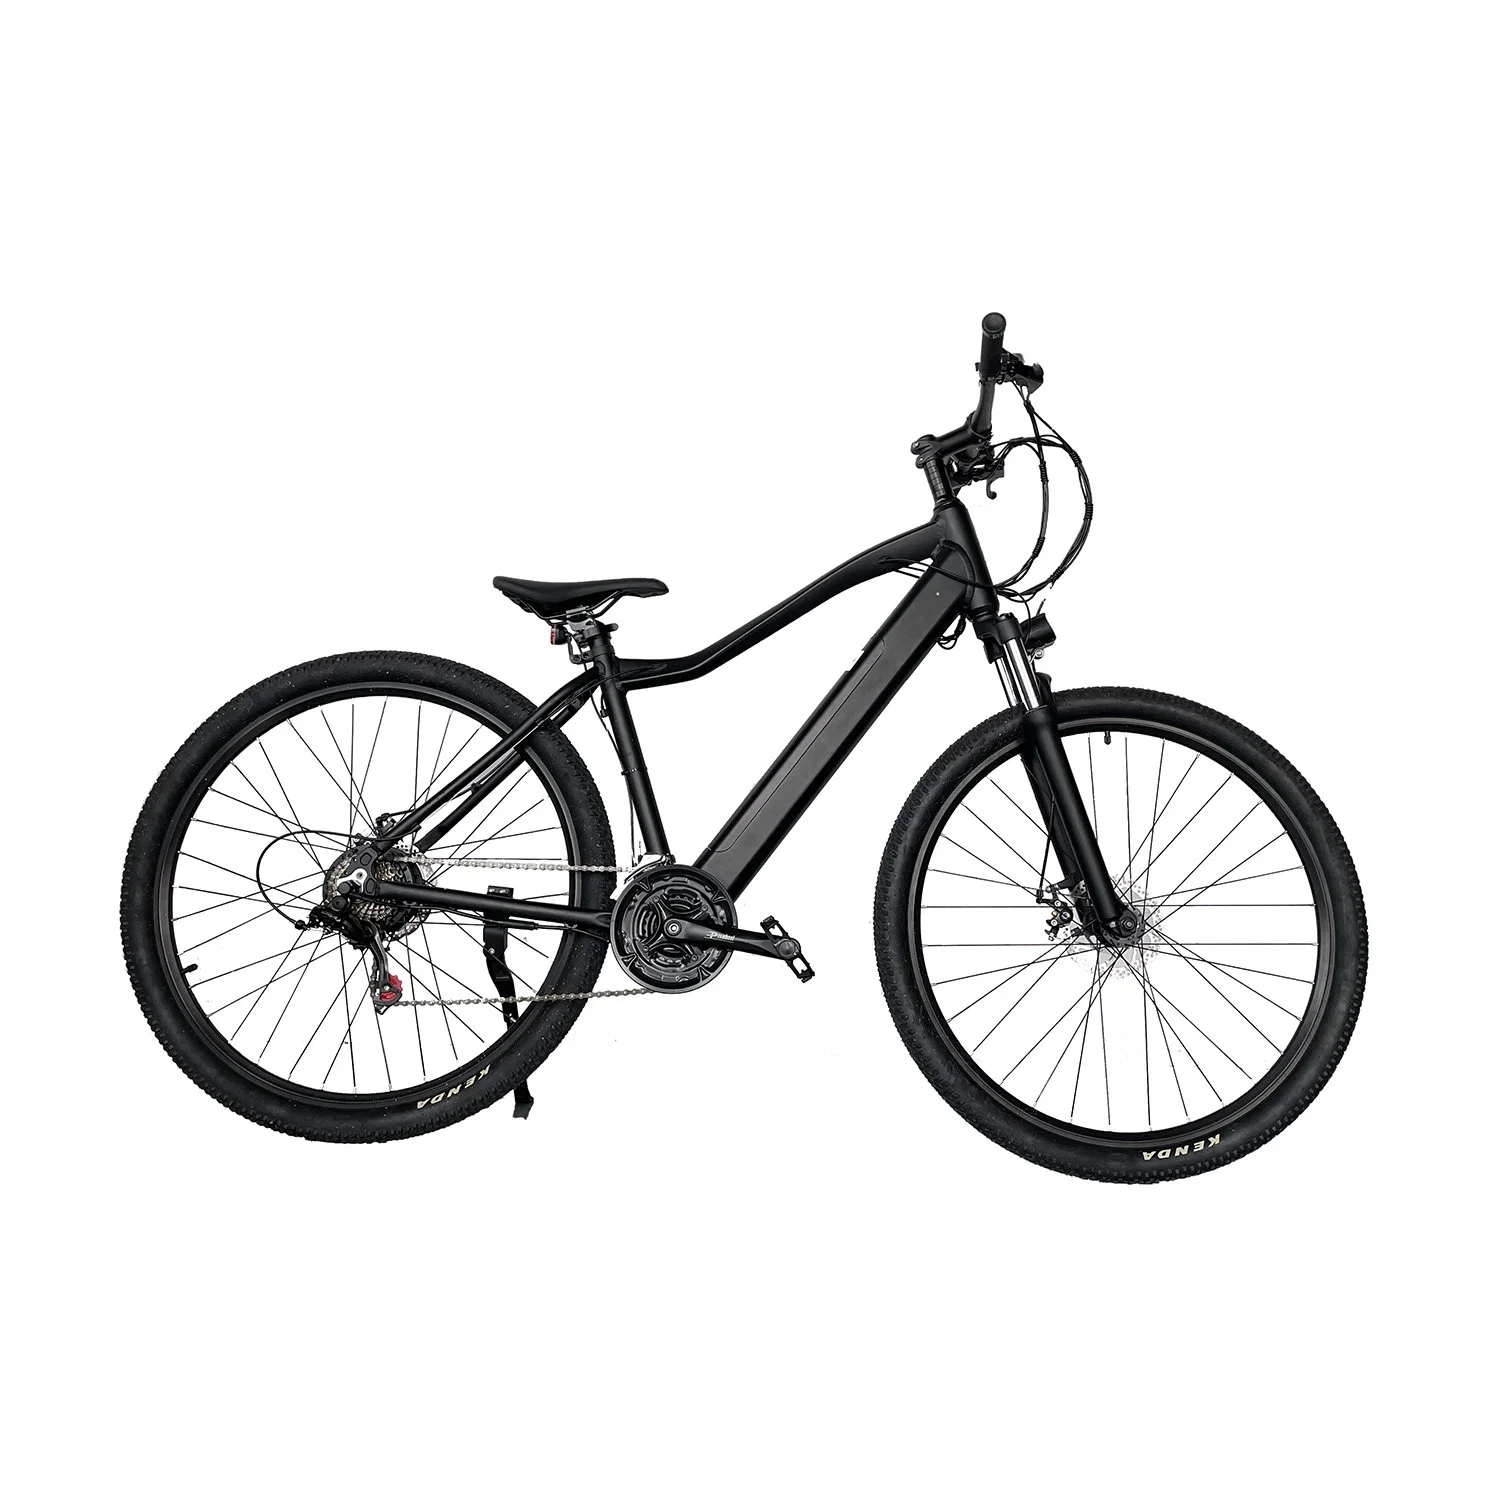 Chanson /29*2.125 350W 500W Electric Mountain E Bike/Snow Bike/Electric Bicycle with CE